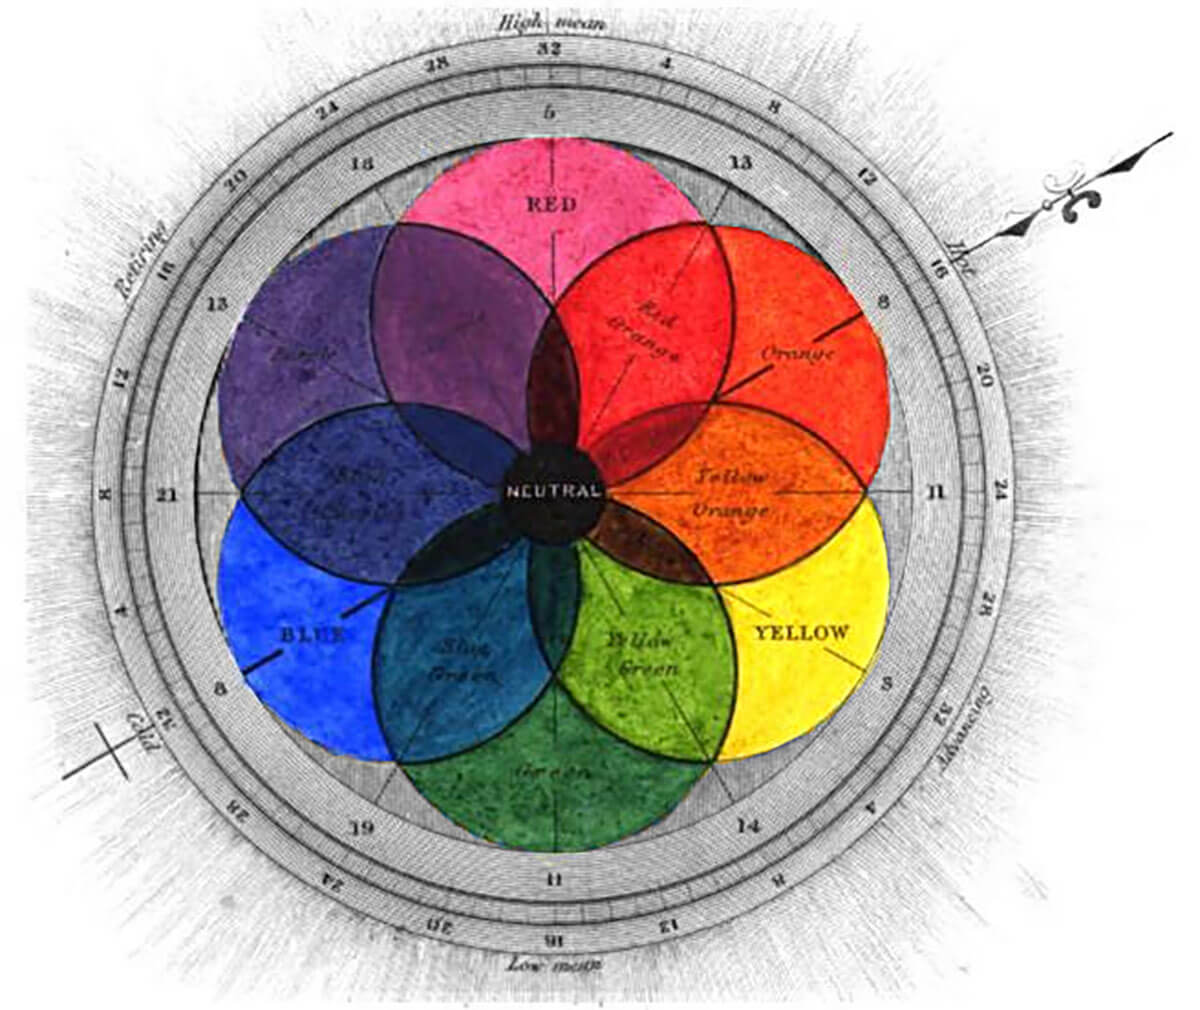 https://www.ecgprod.com/wp-content/uploads/2017/07/color-chart-chromatography-1841-george-field.jpg